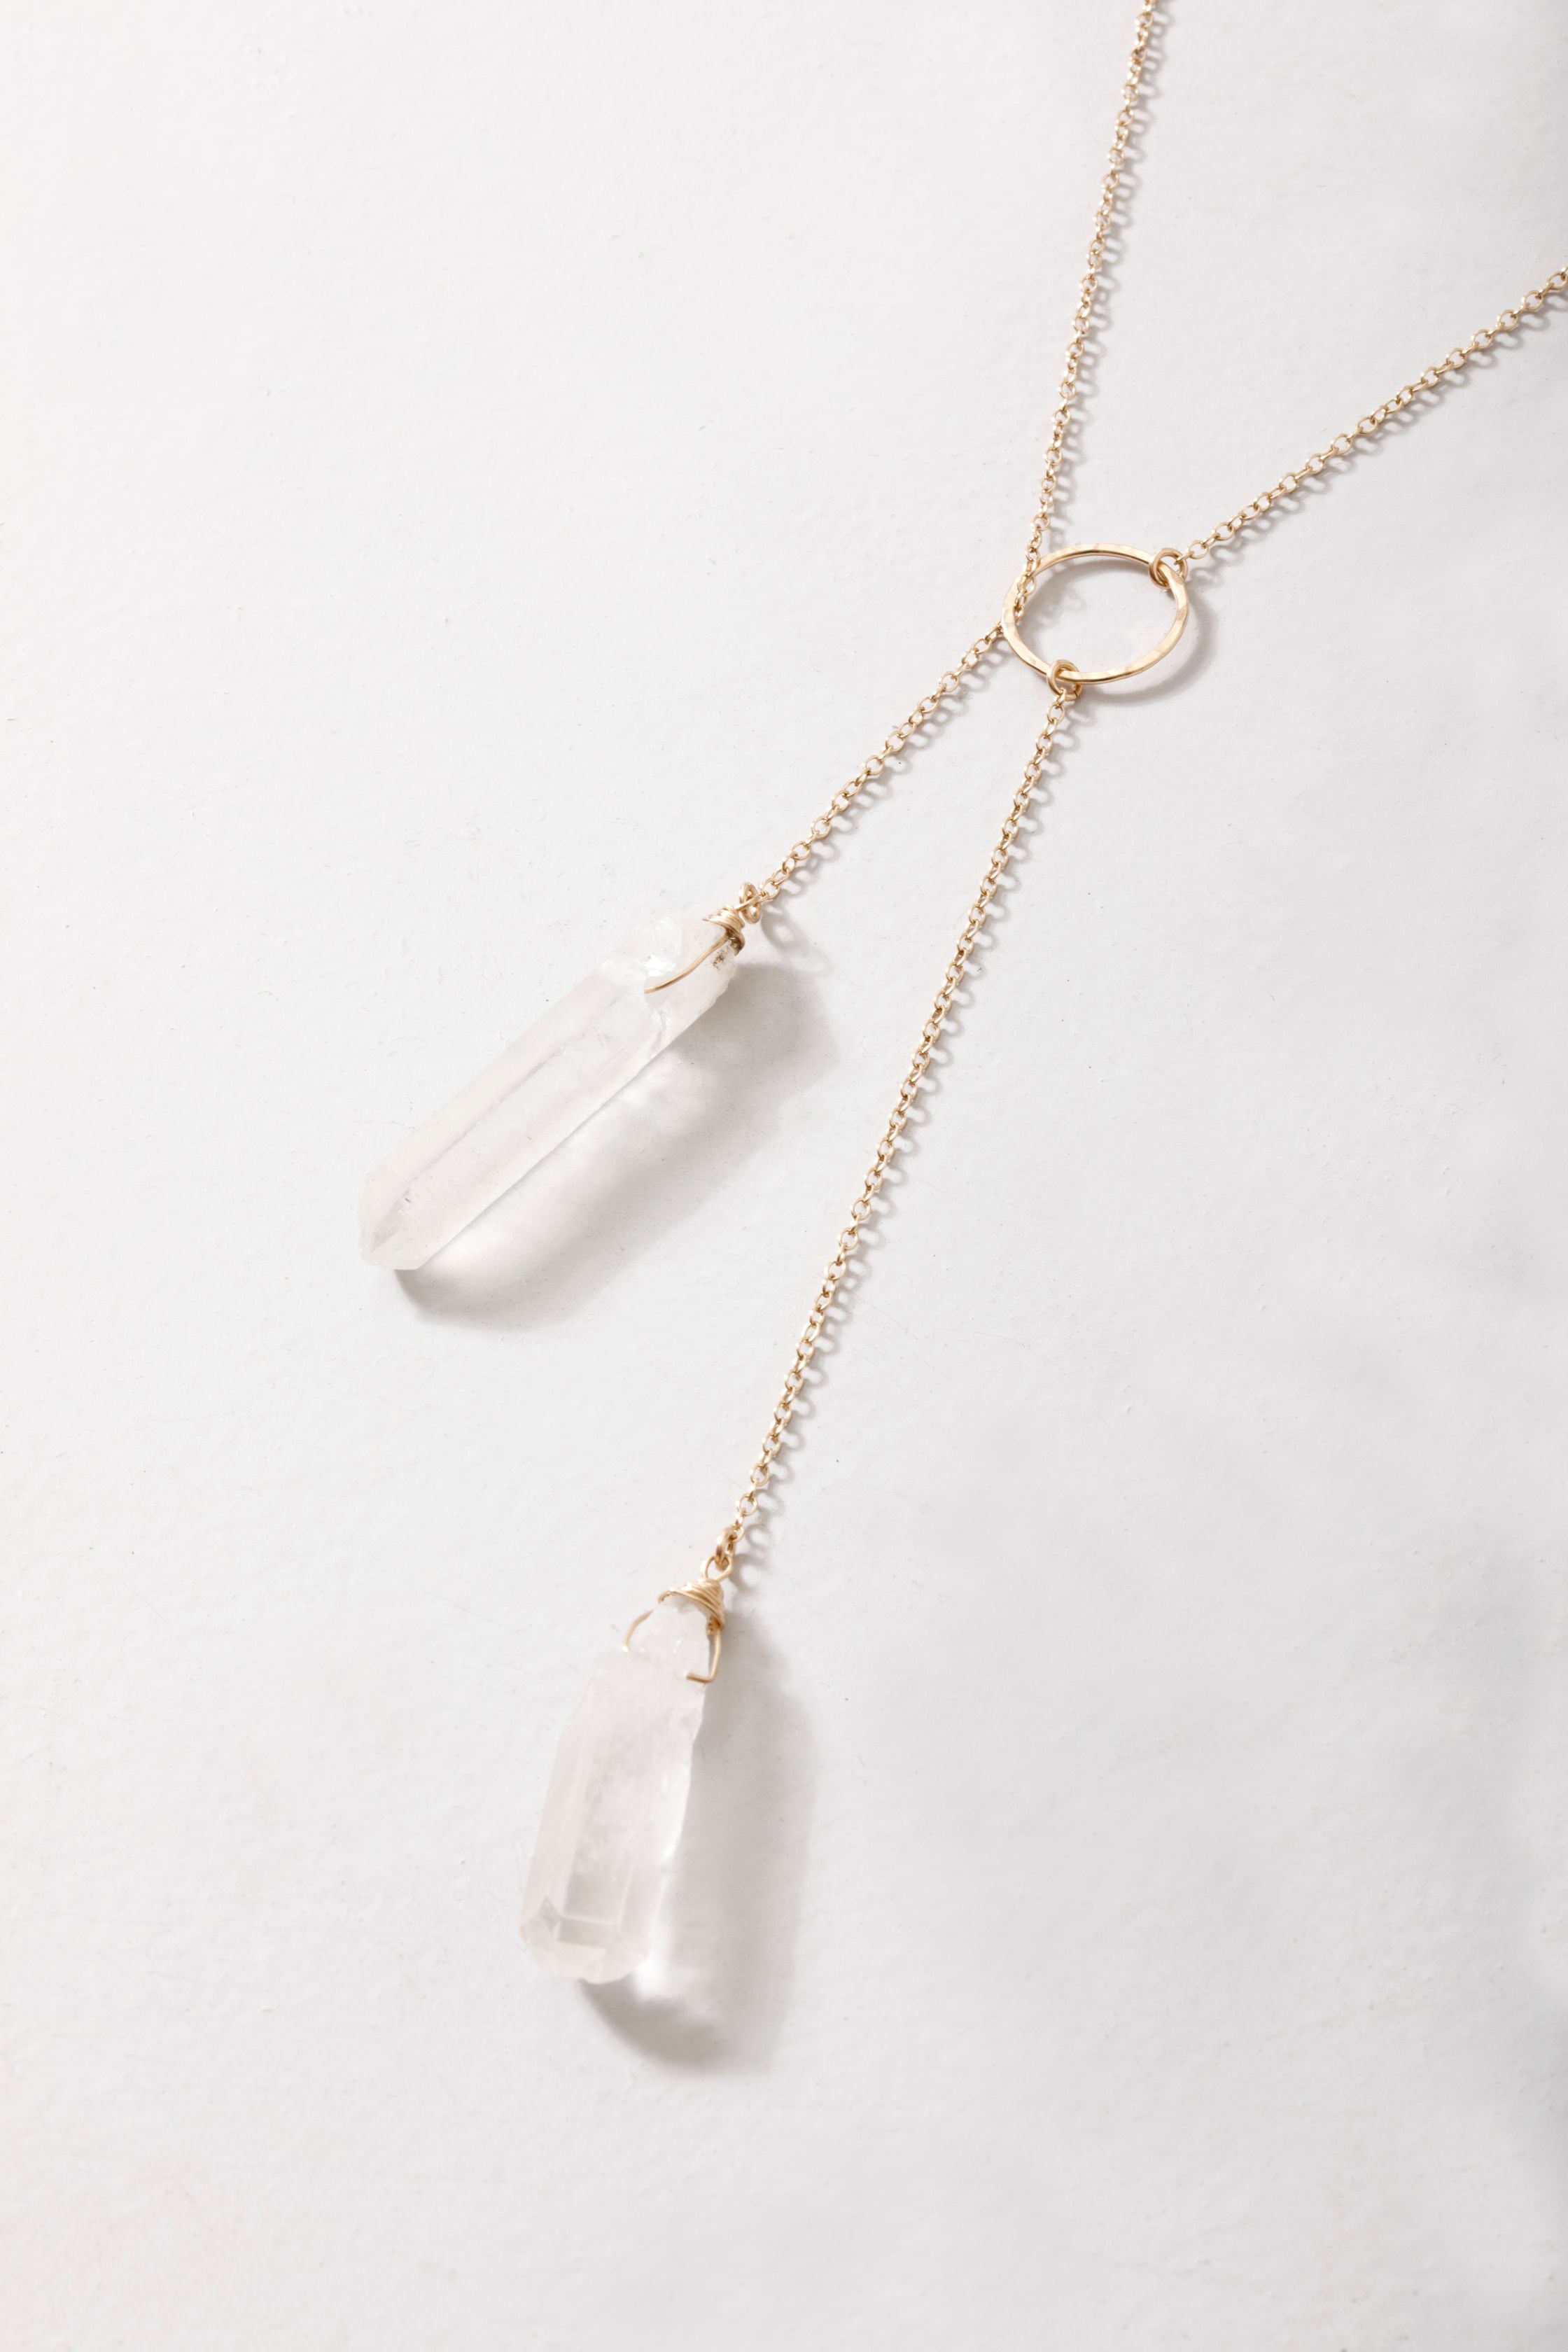 Boho Raw Crystal Necklace - Natural Stone Pendant